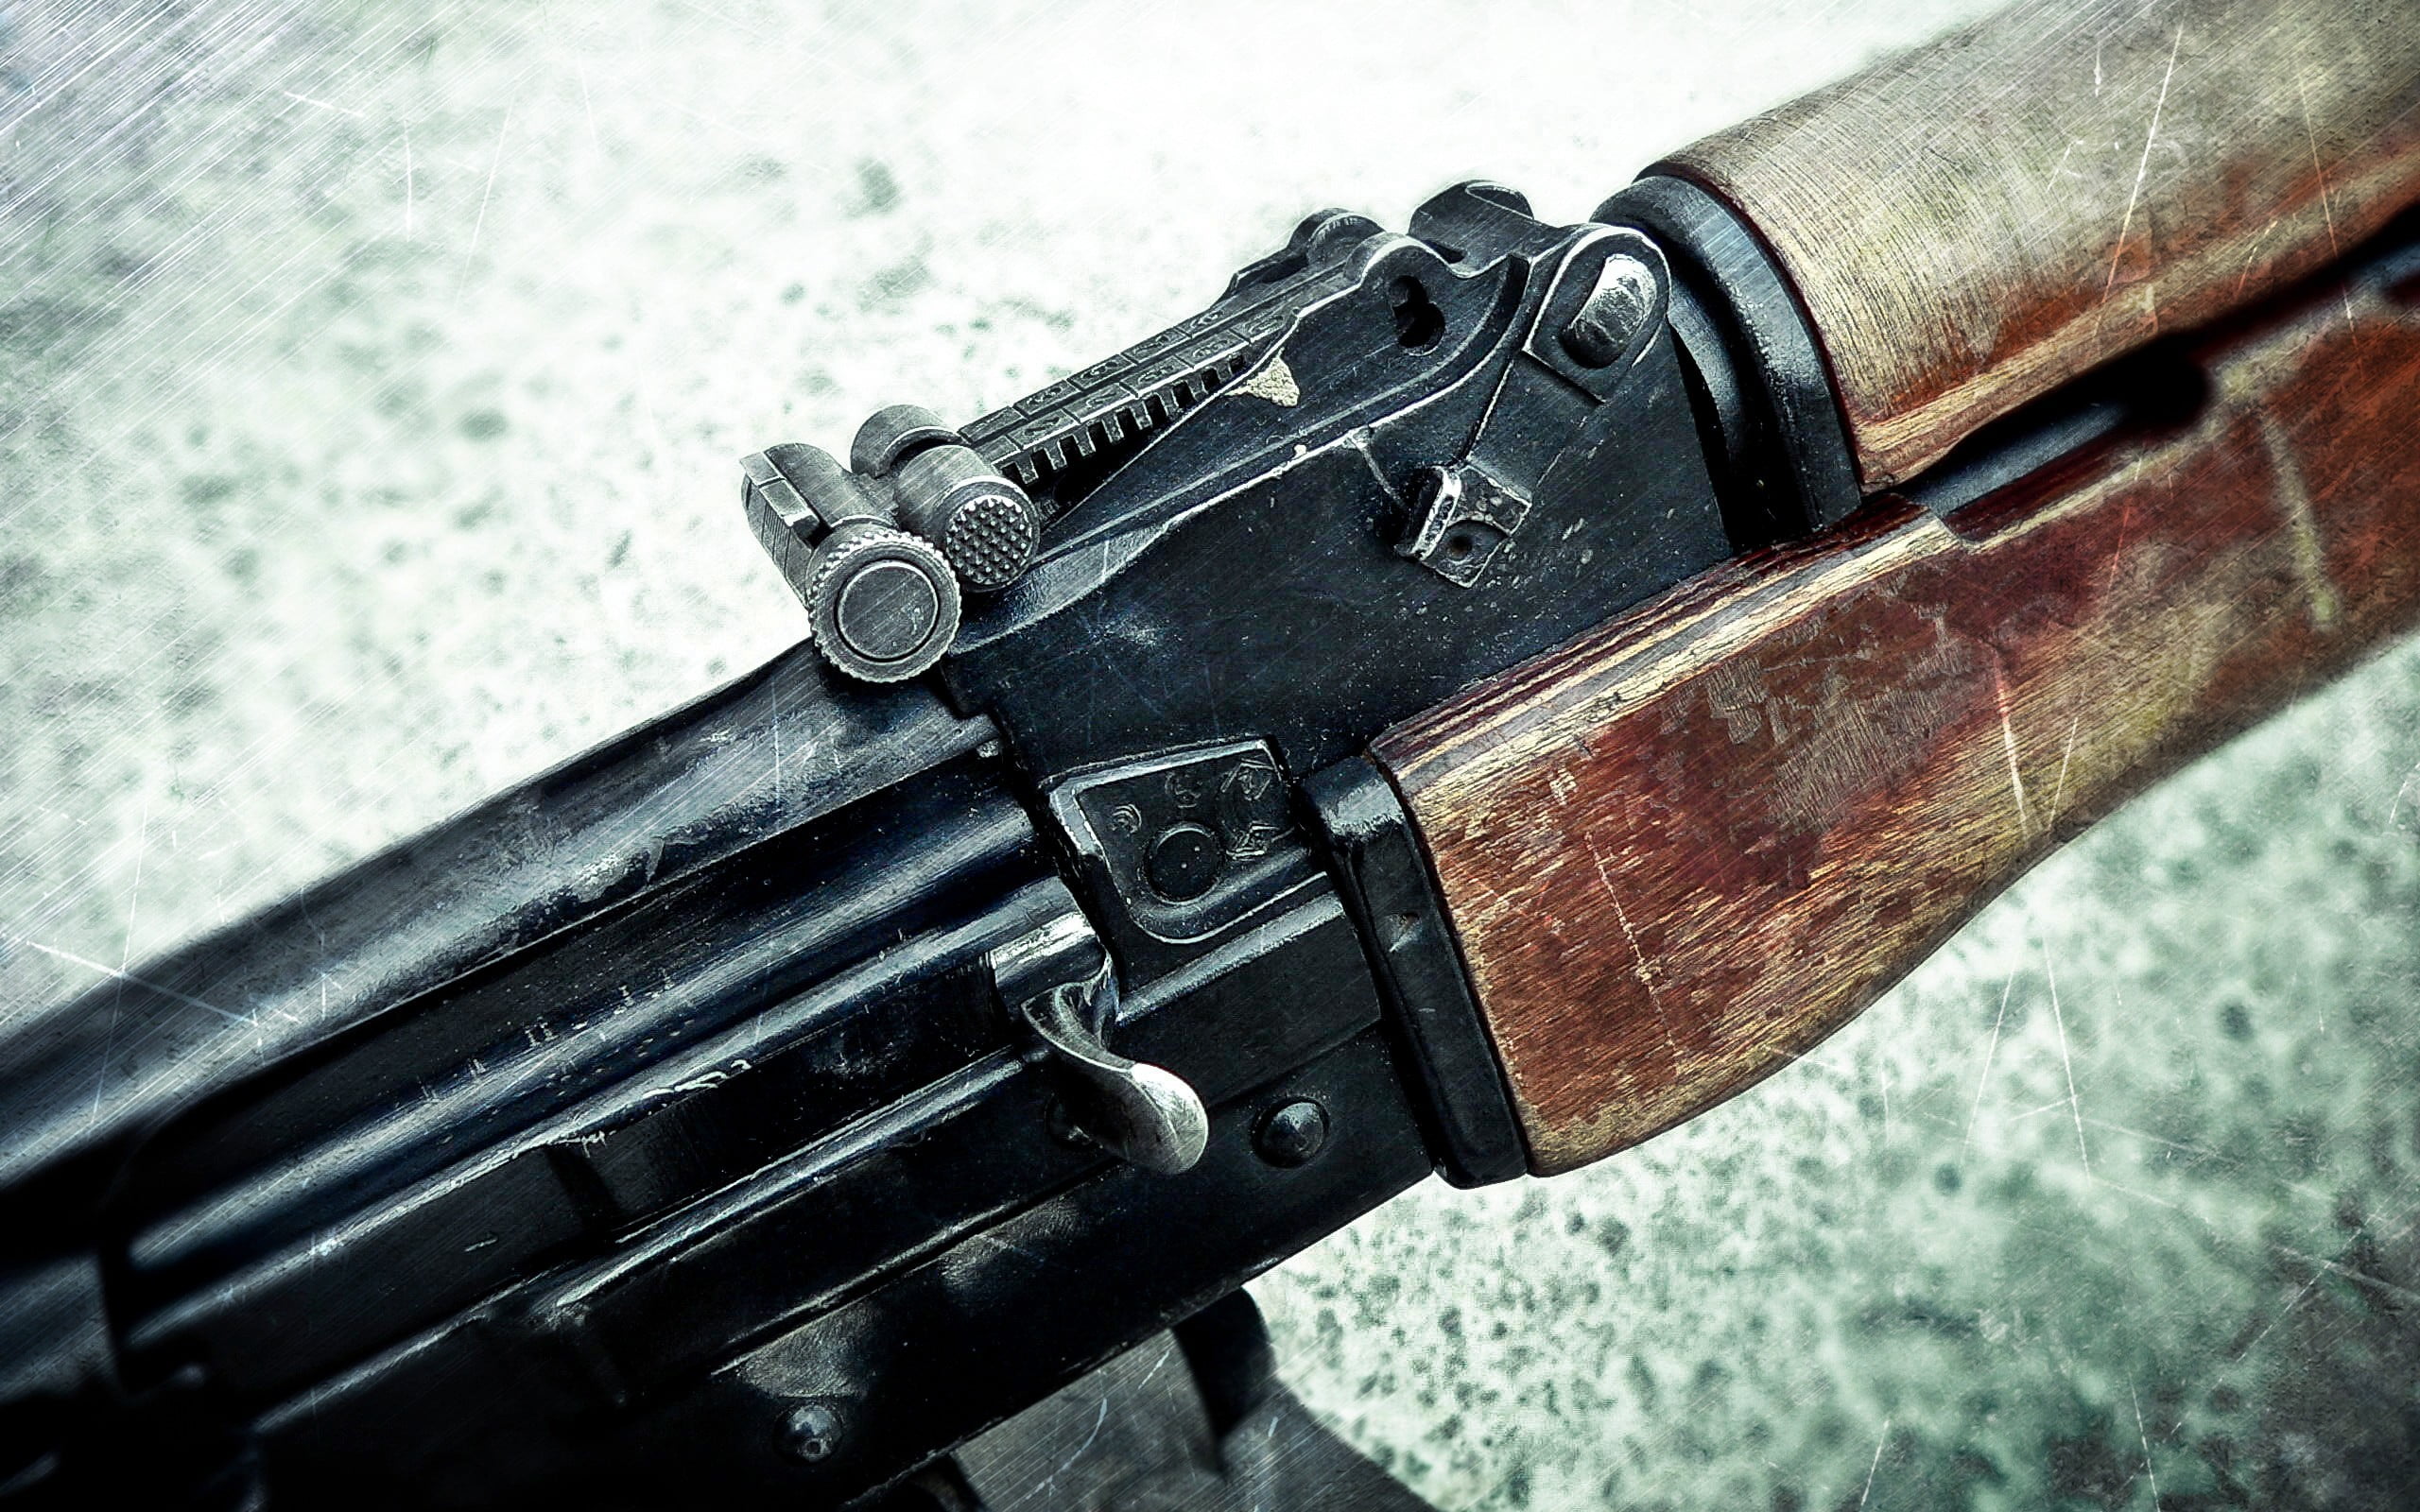 black bolt action rifle, gun, kalashnikov, AKM, weapon